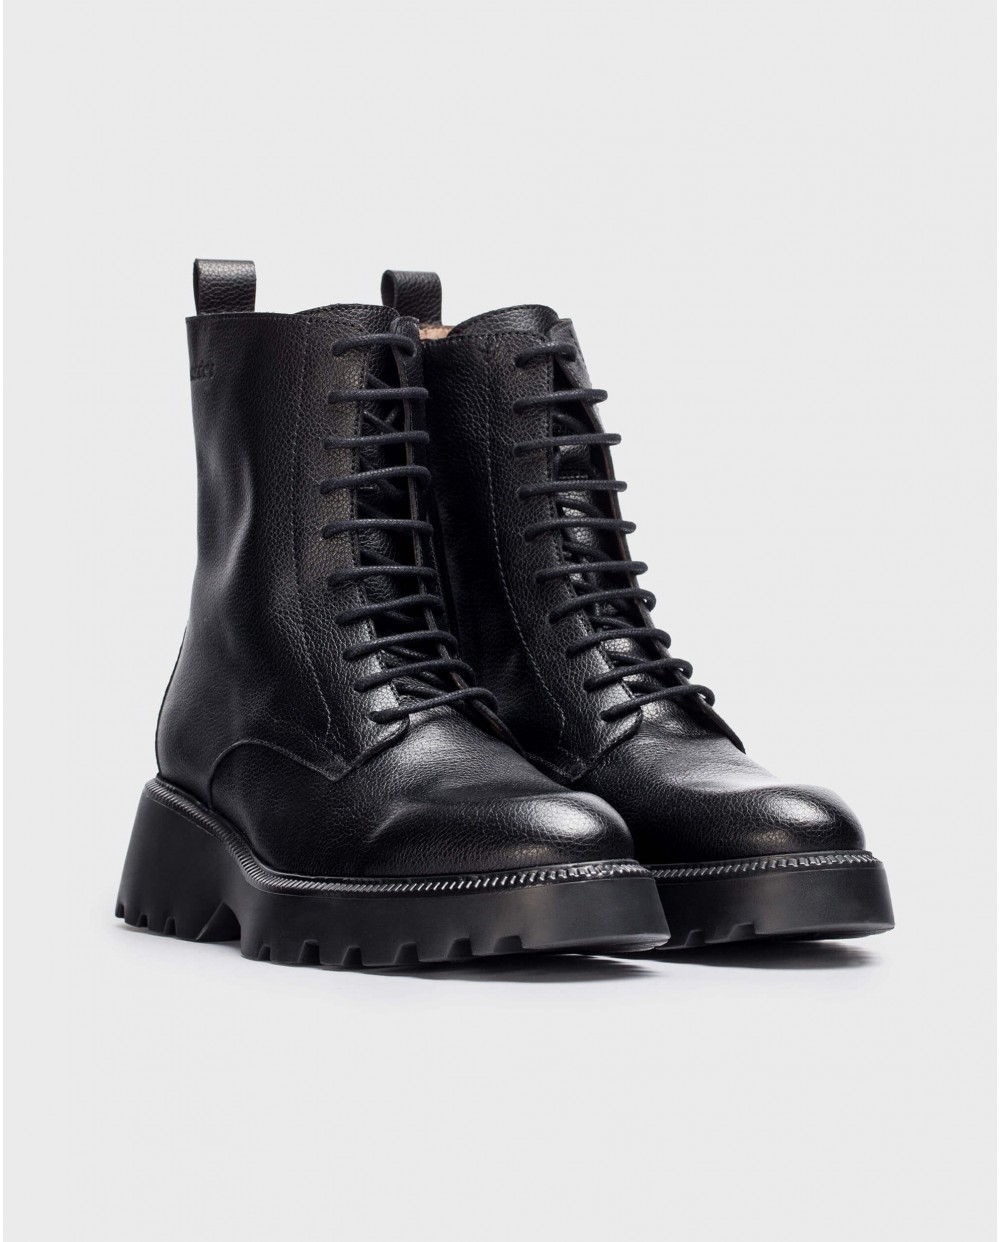 Wonders.com | Black leather ATARI ankle boot C-7205 WILD